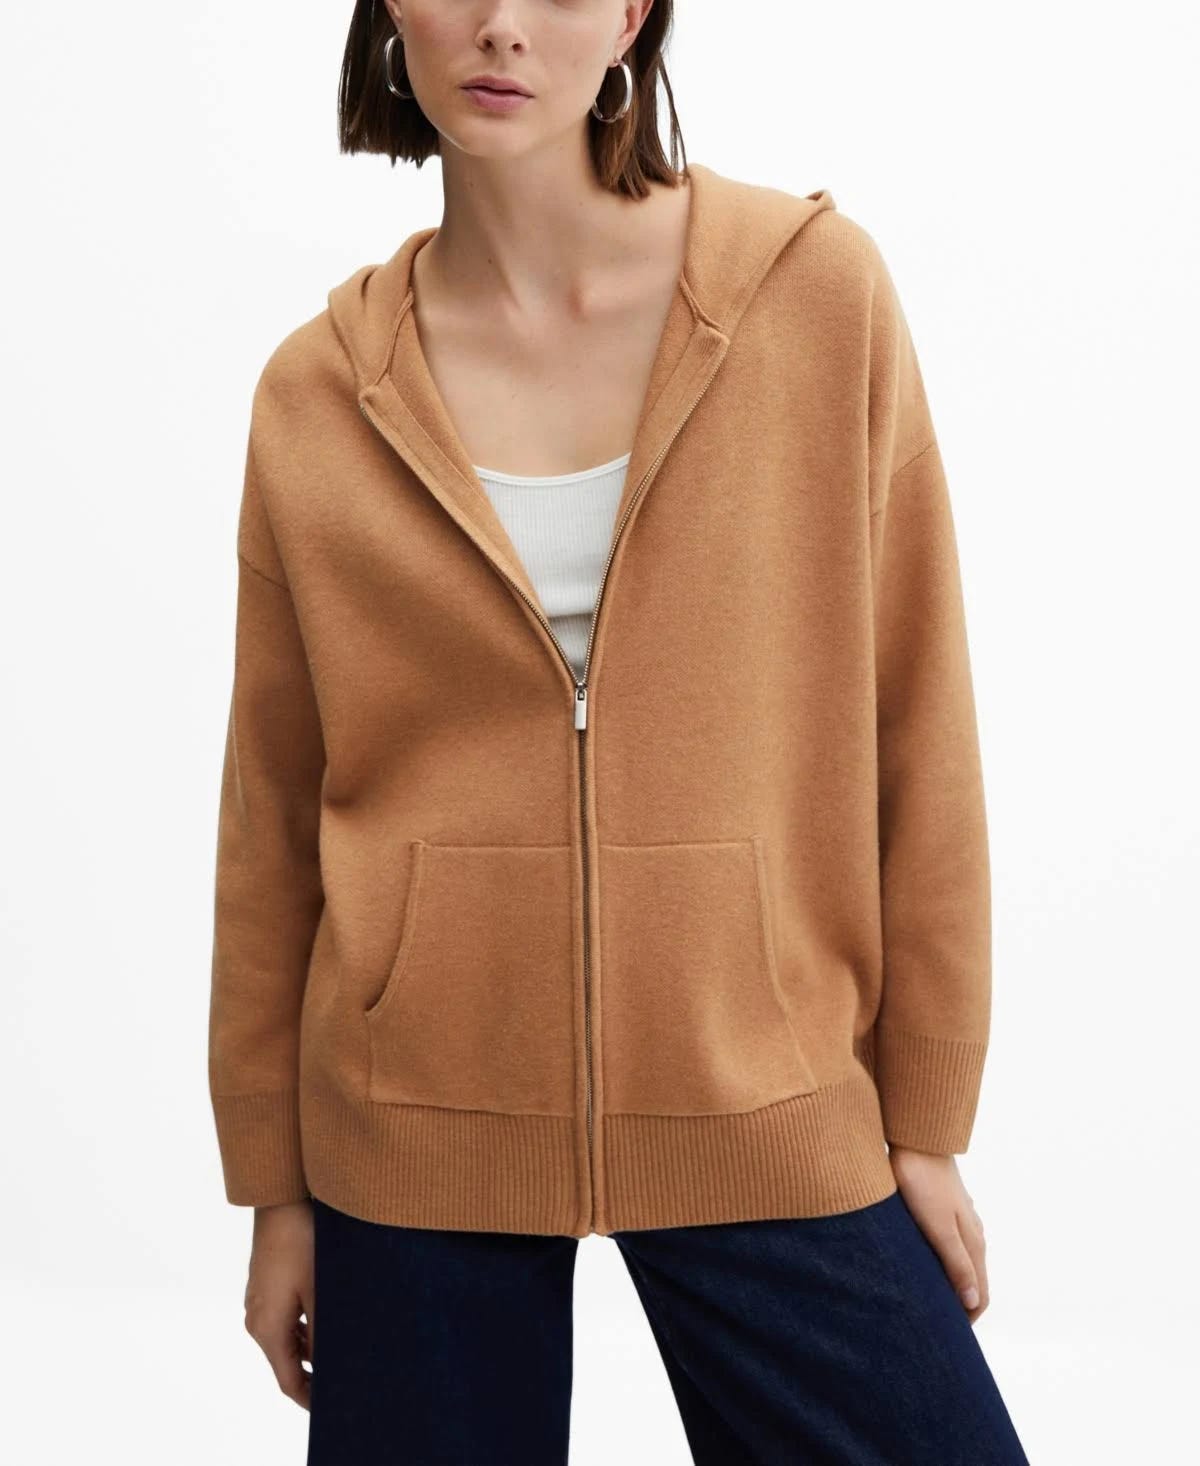 Stylish Brown Zip-Up Knitted Sweatshirt for Women | Image